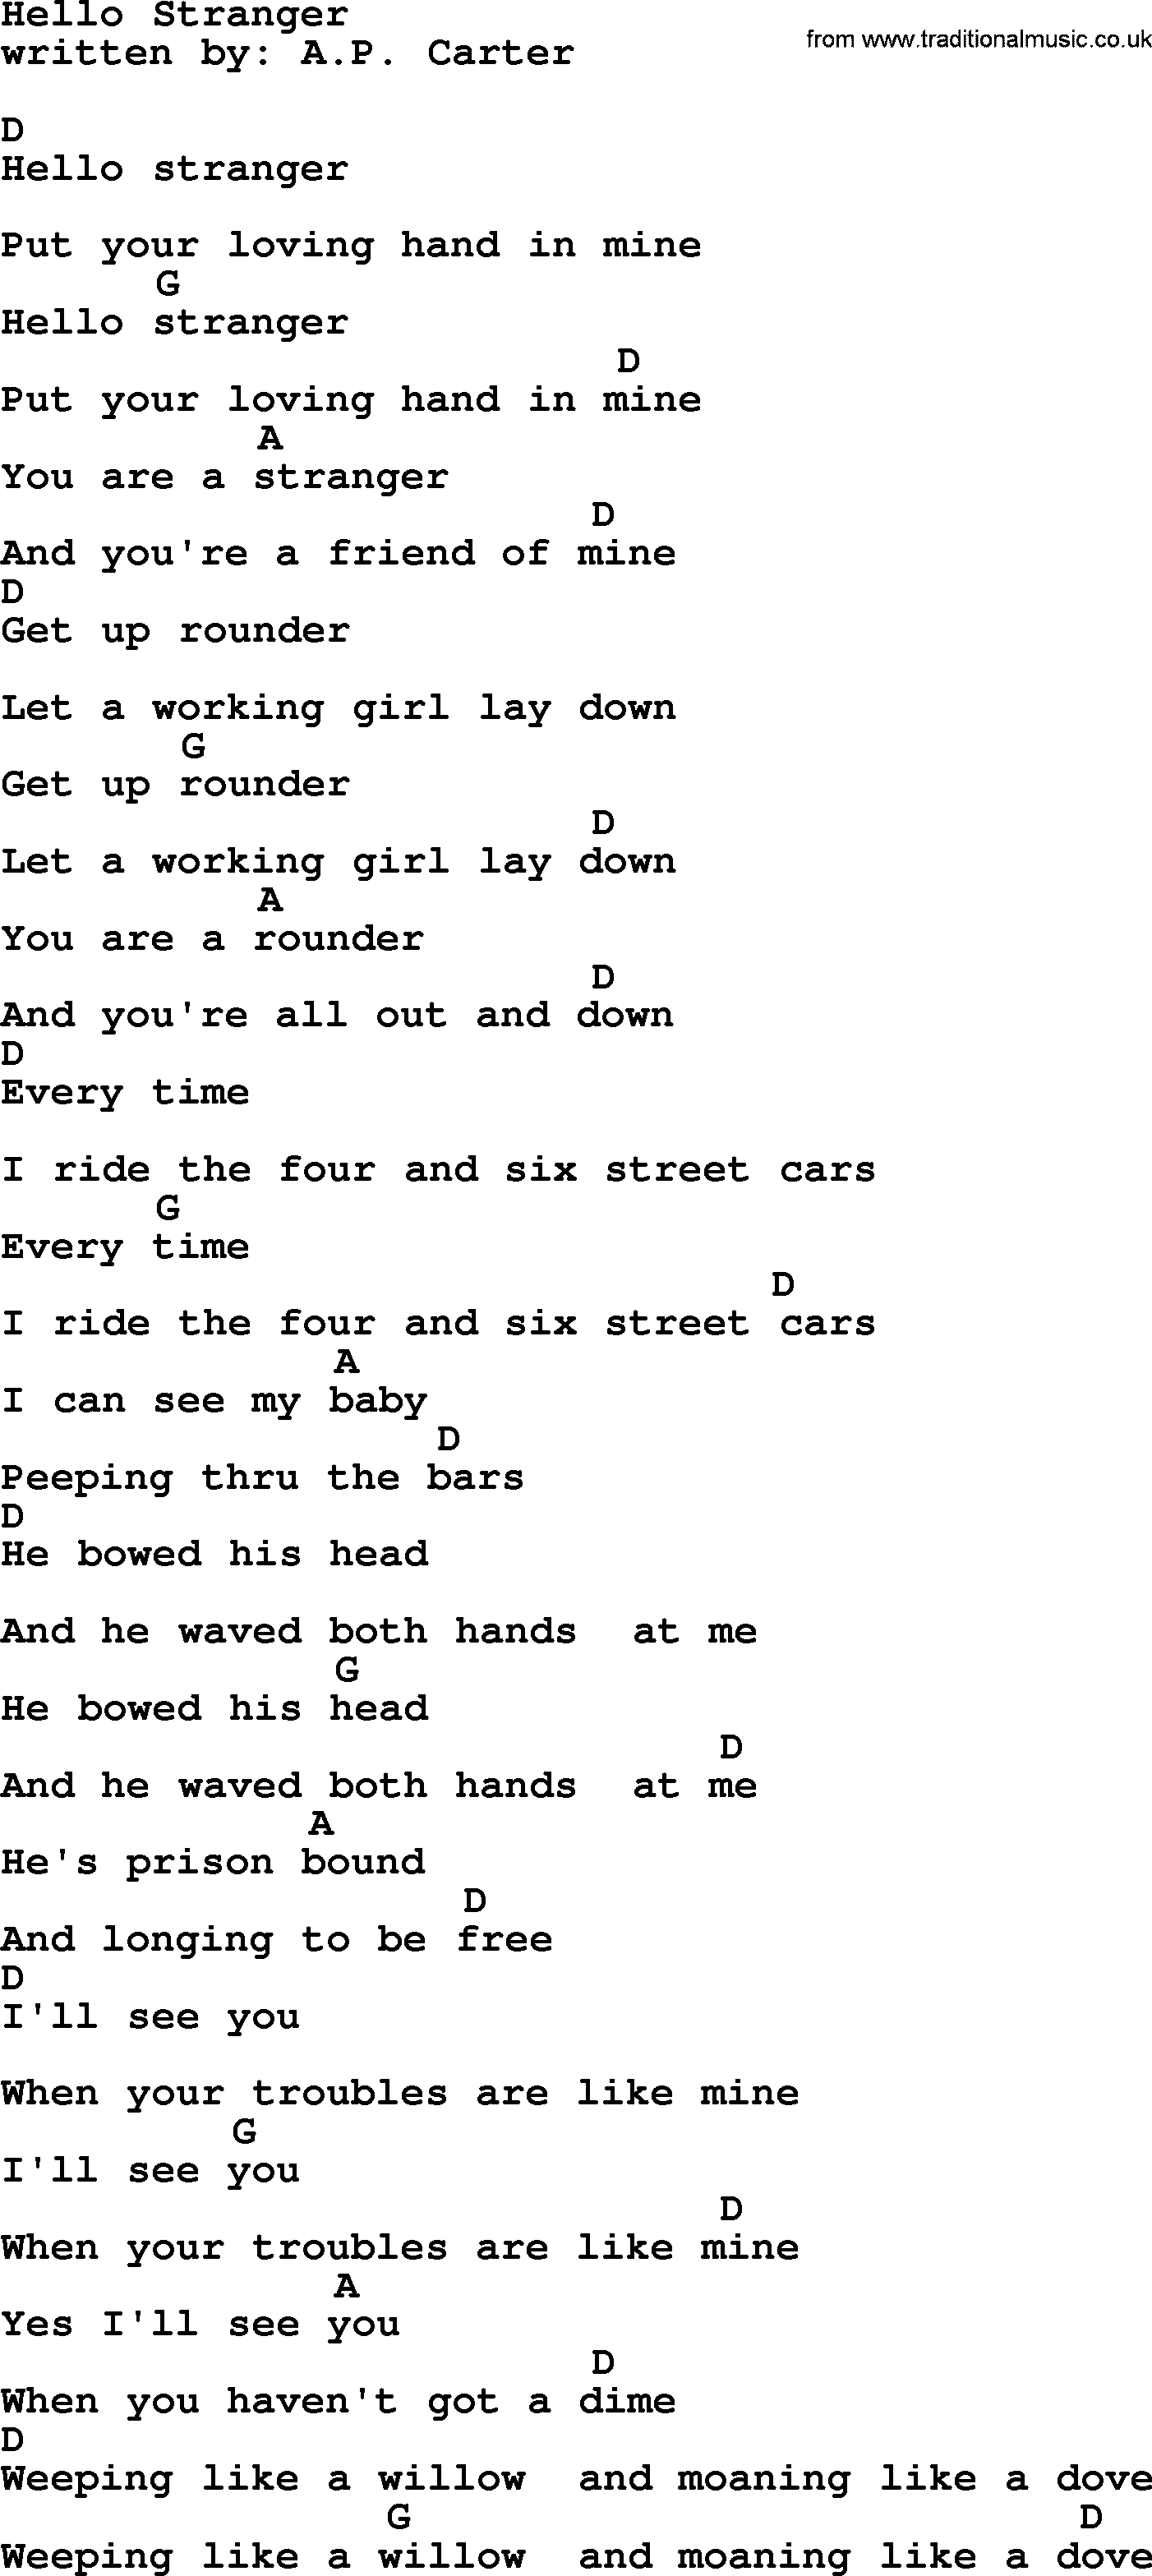 Emmylou Harris song: Hello Stranger lyrics and chords